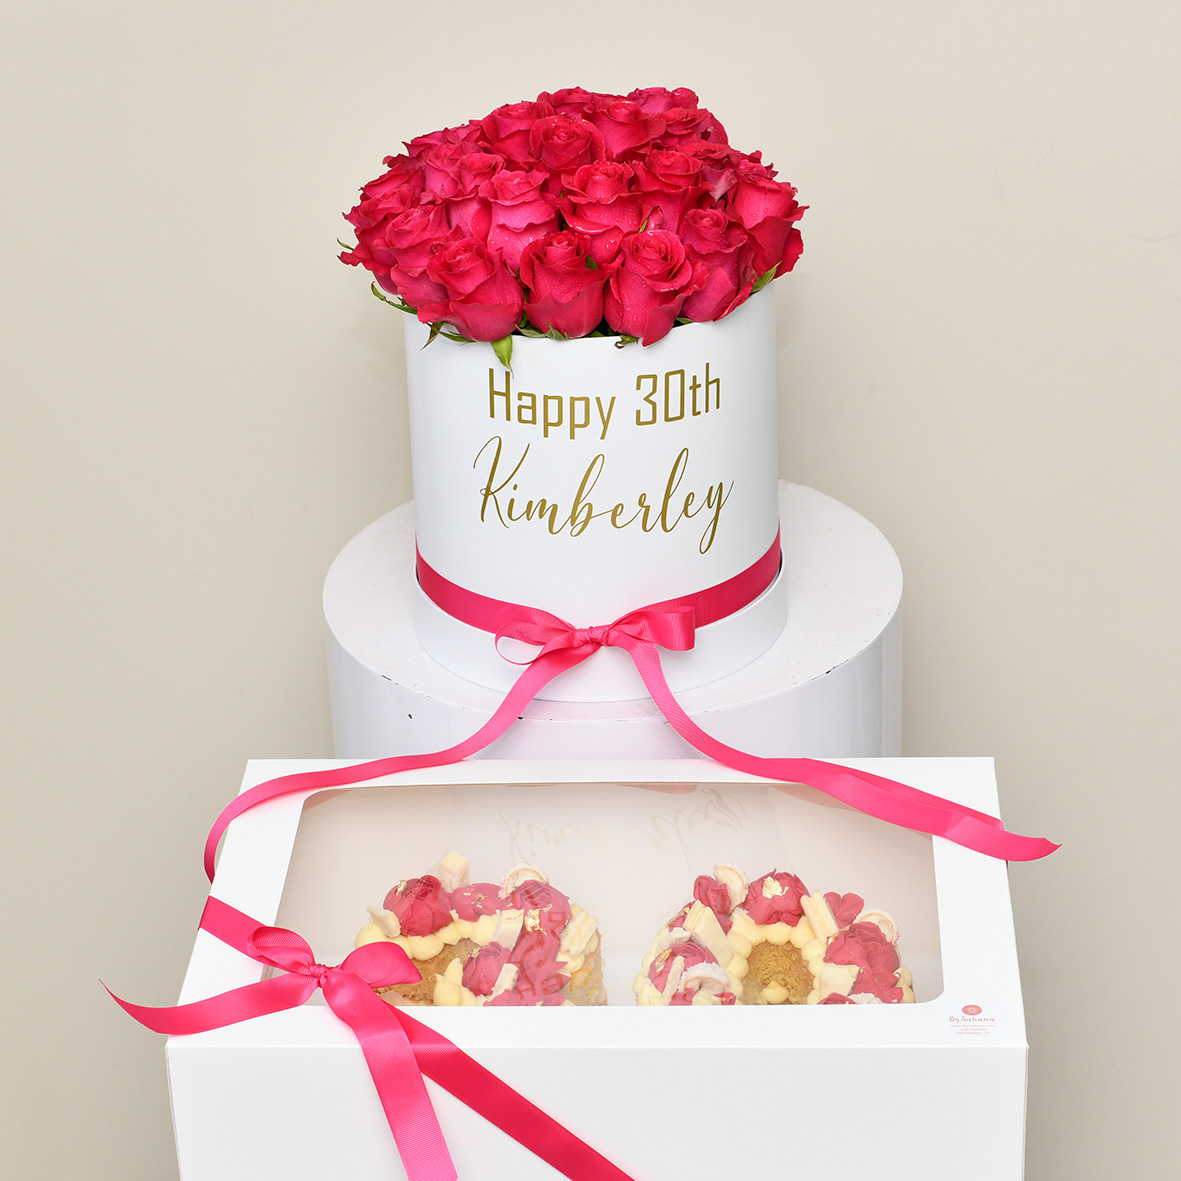 Anniversary Cakes & Flowers Sydney